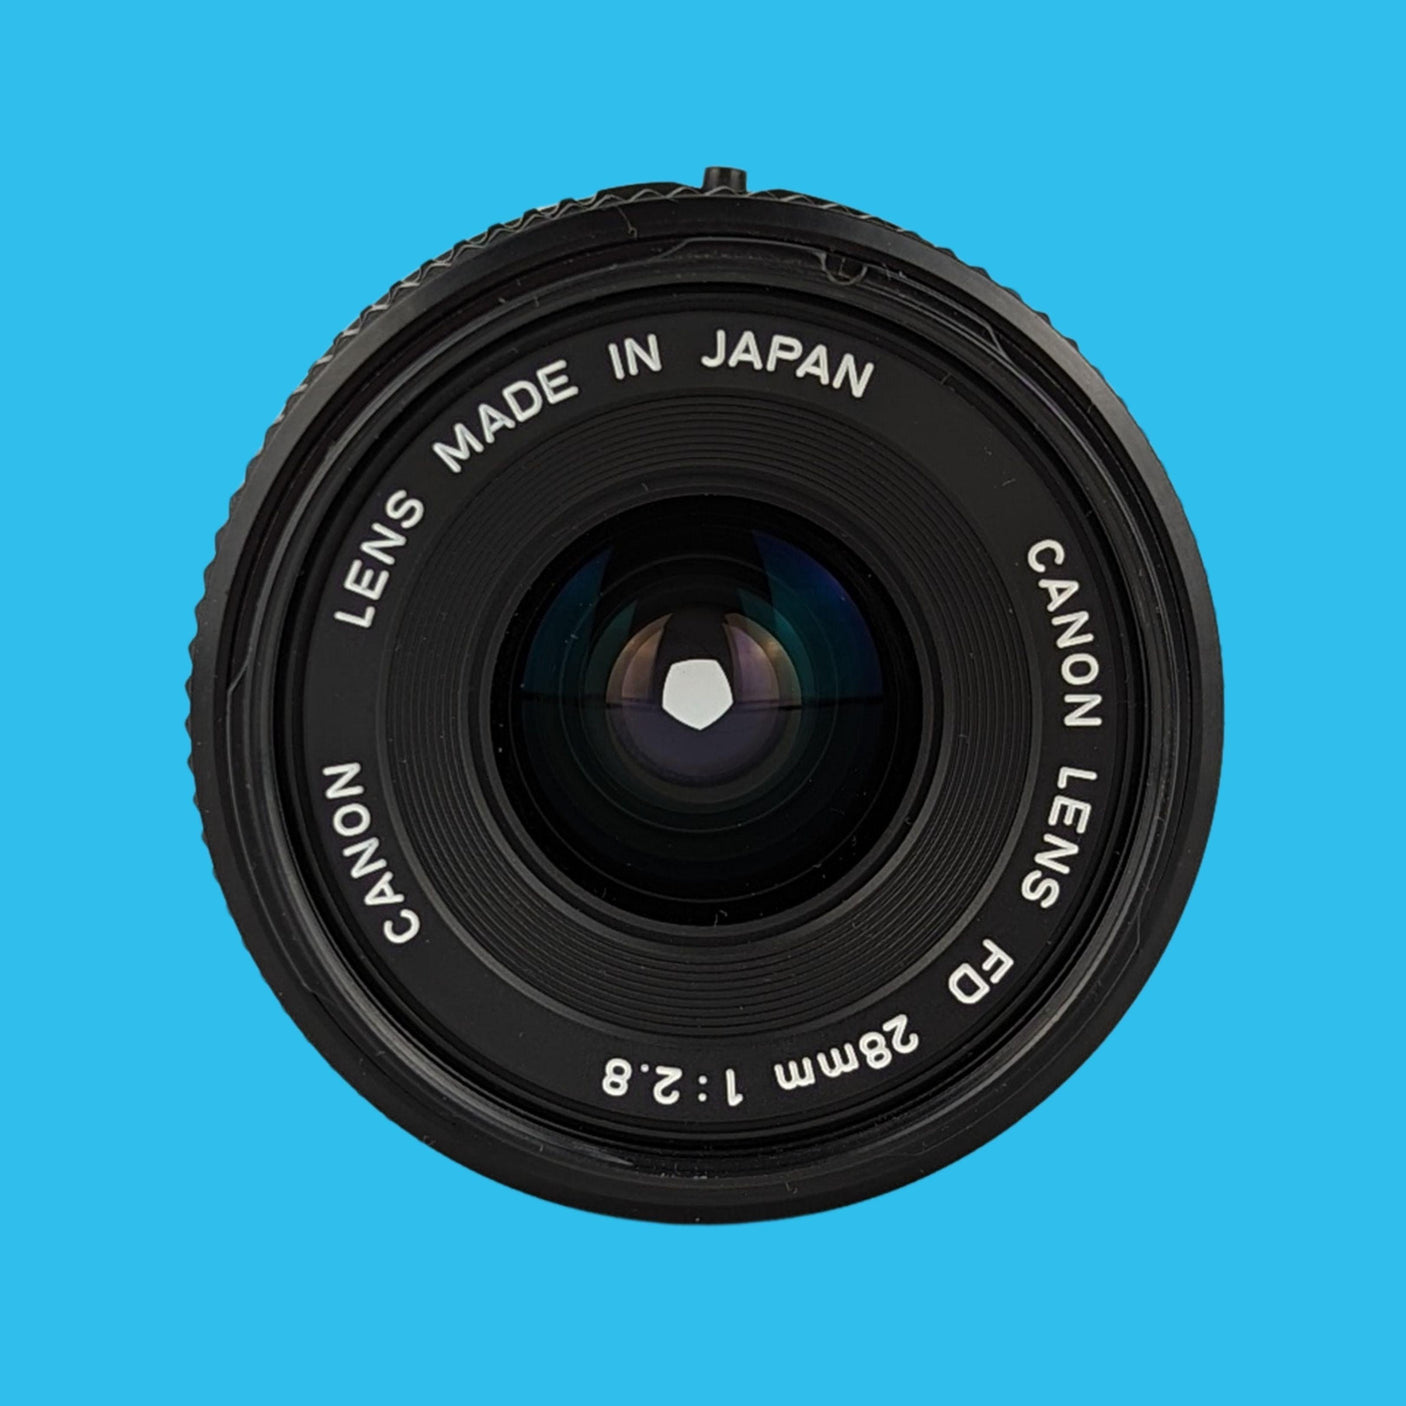 Canon FD 28mm f/2.8 Camera Lens